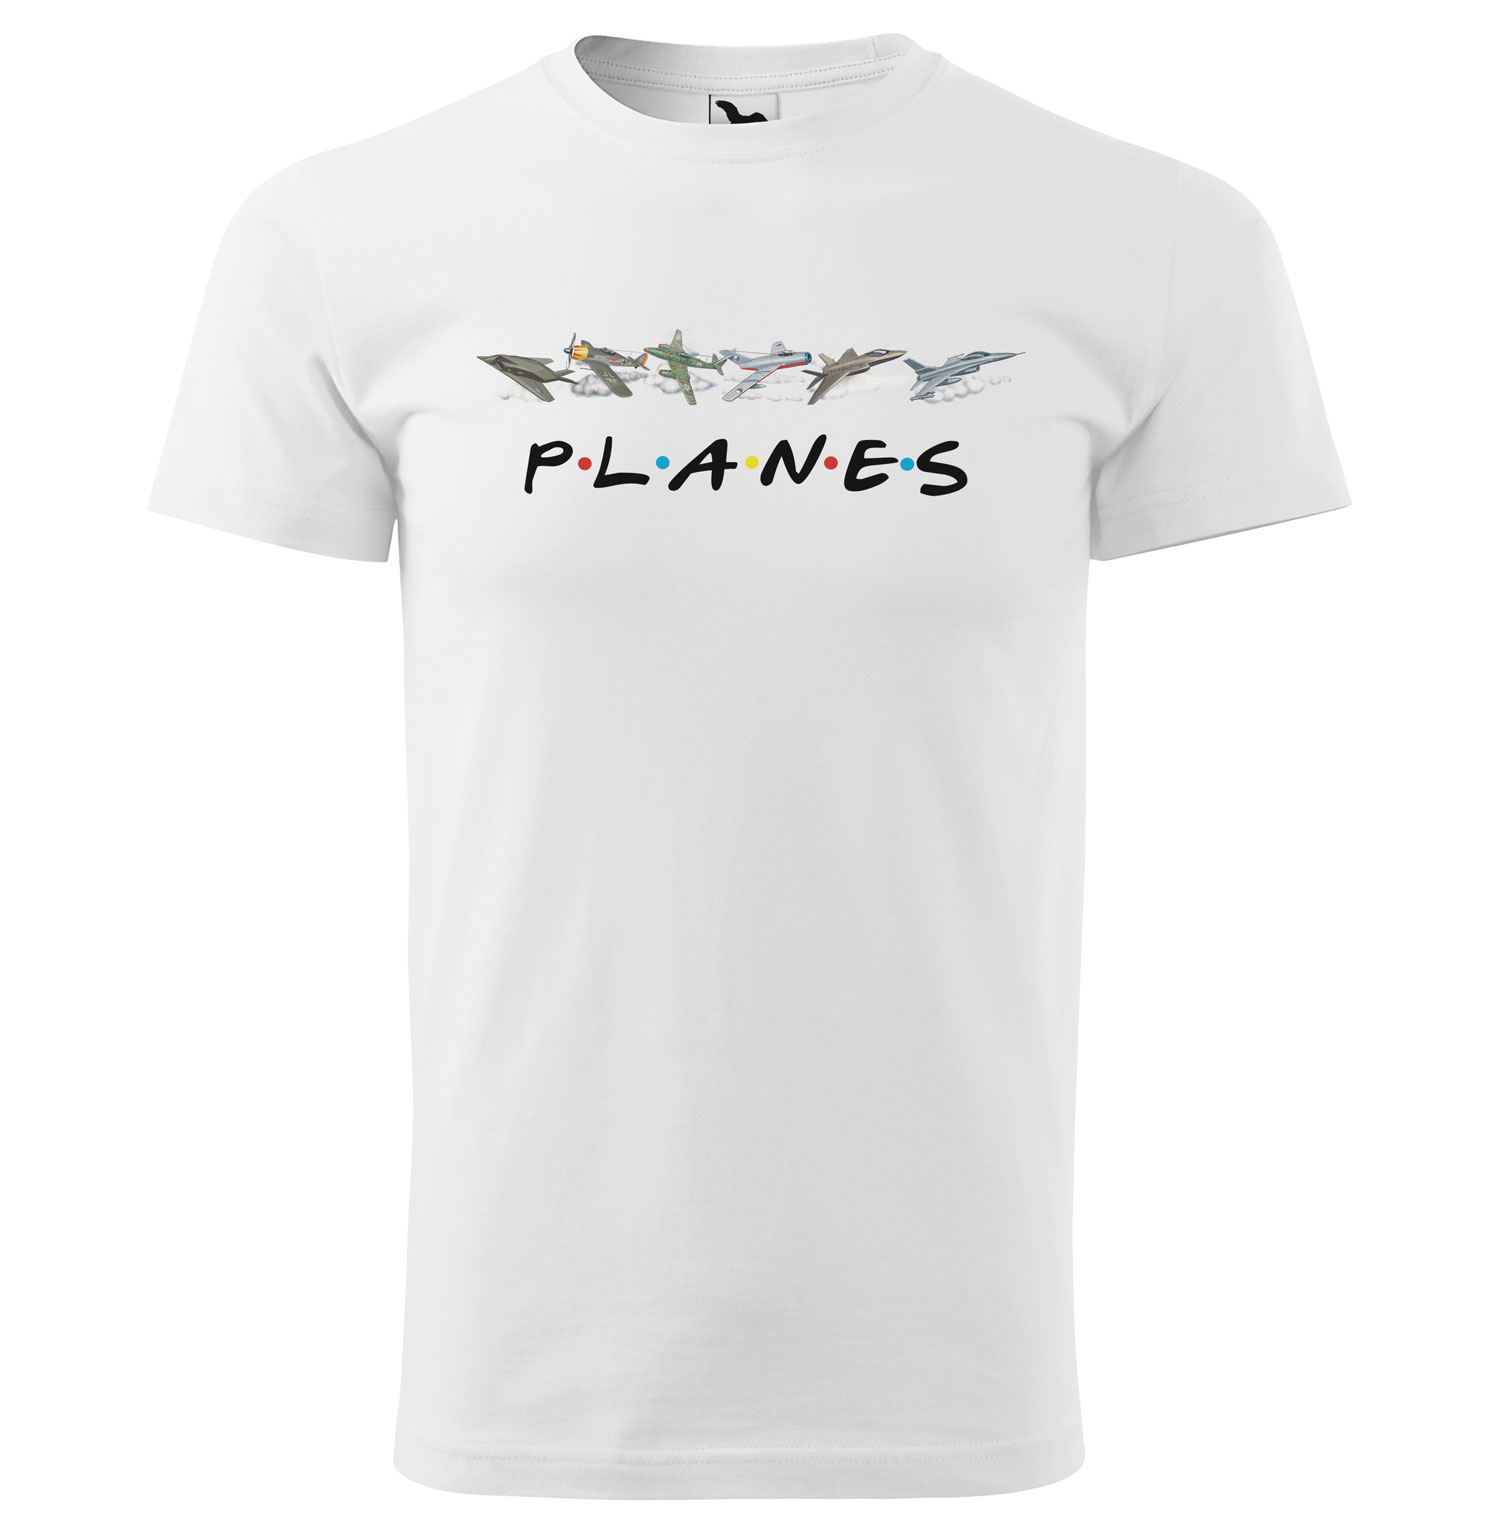 Tričko Planes (Velikost: 2XL, Typ: pro muže, Barva trička: Bílá)